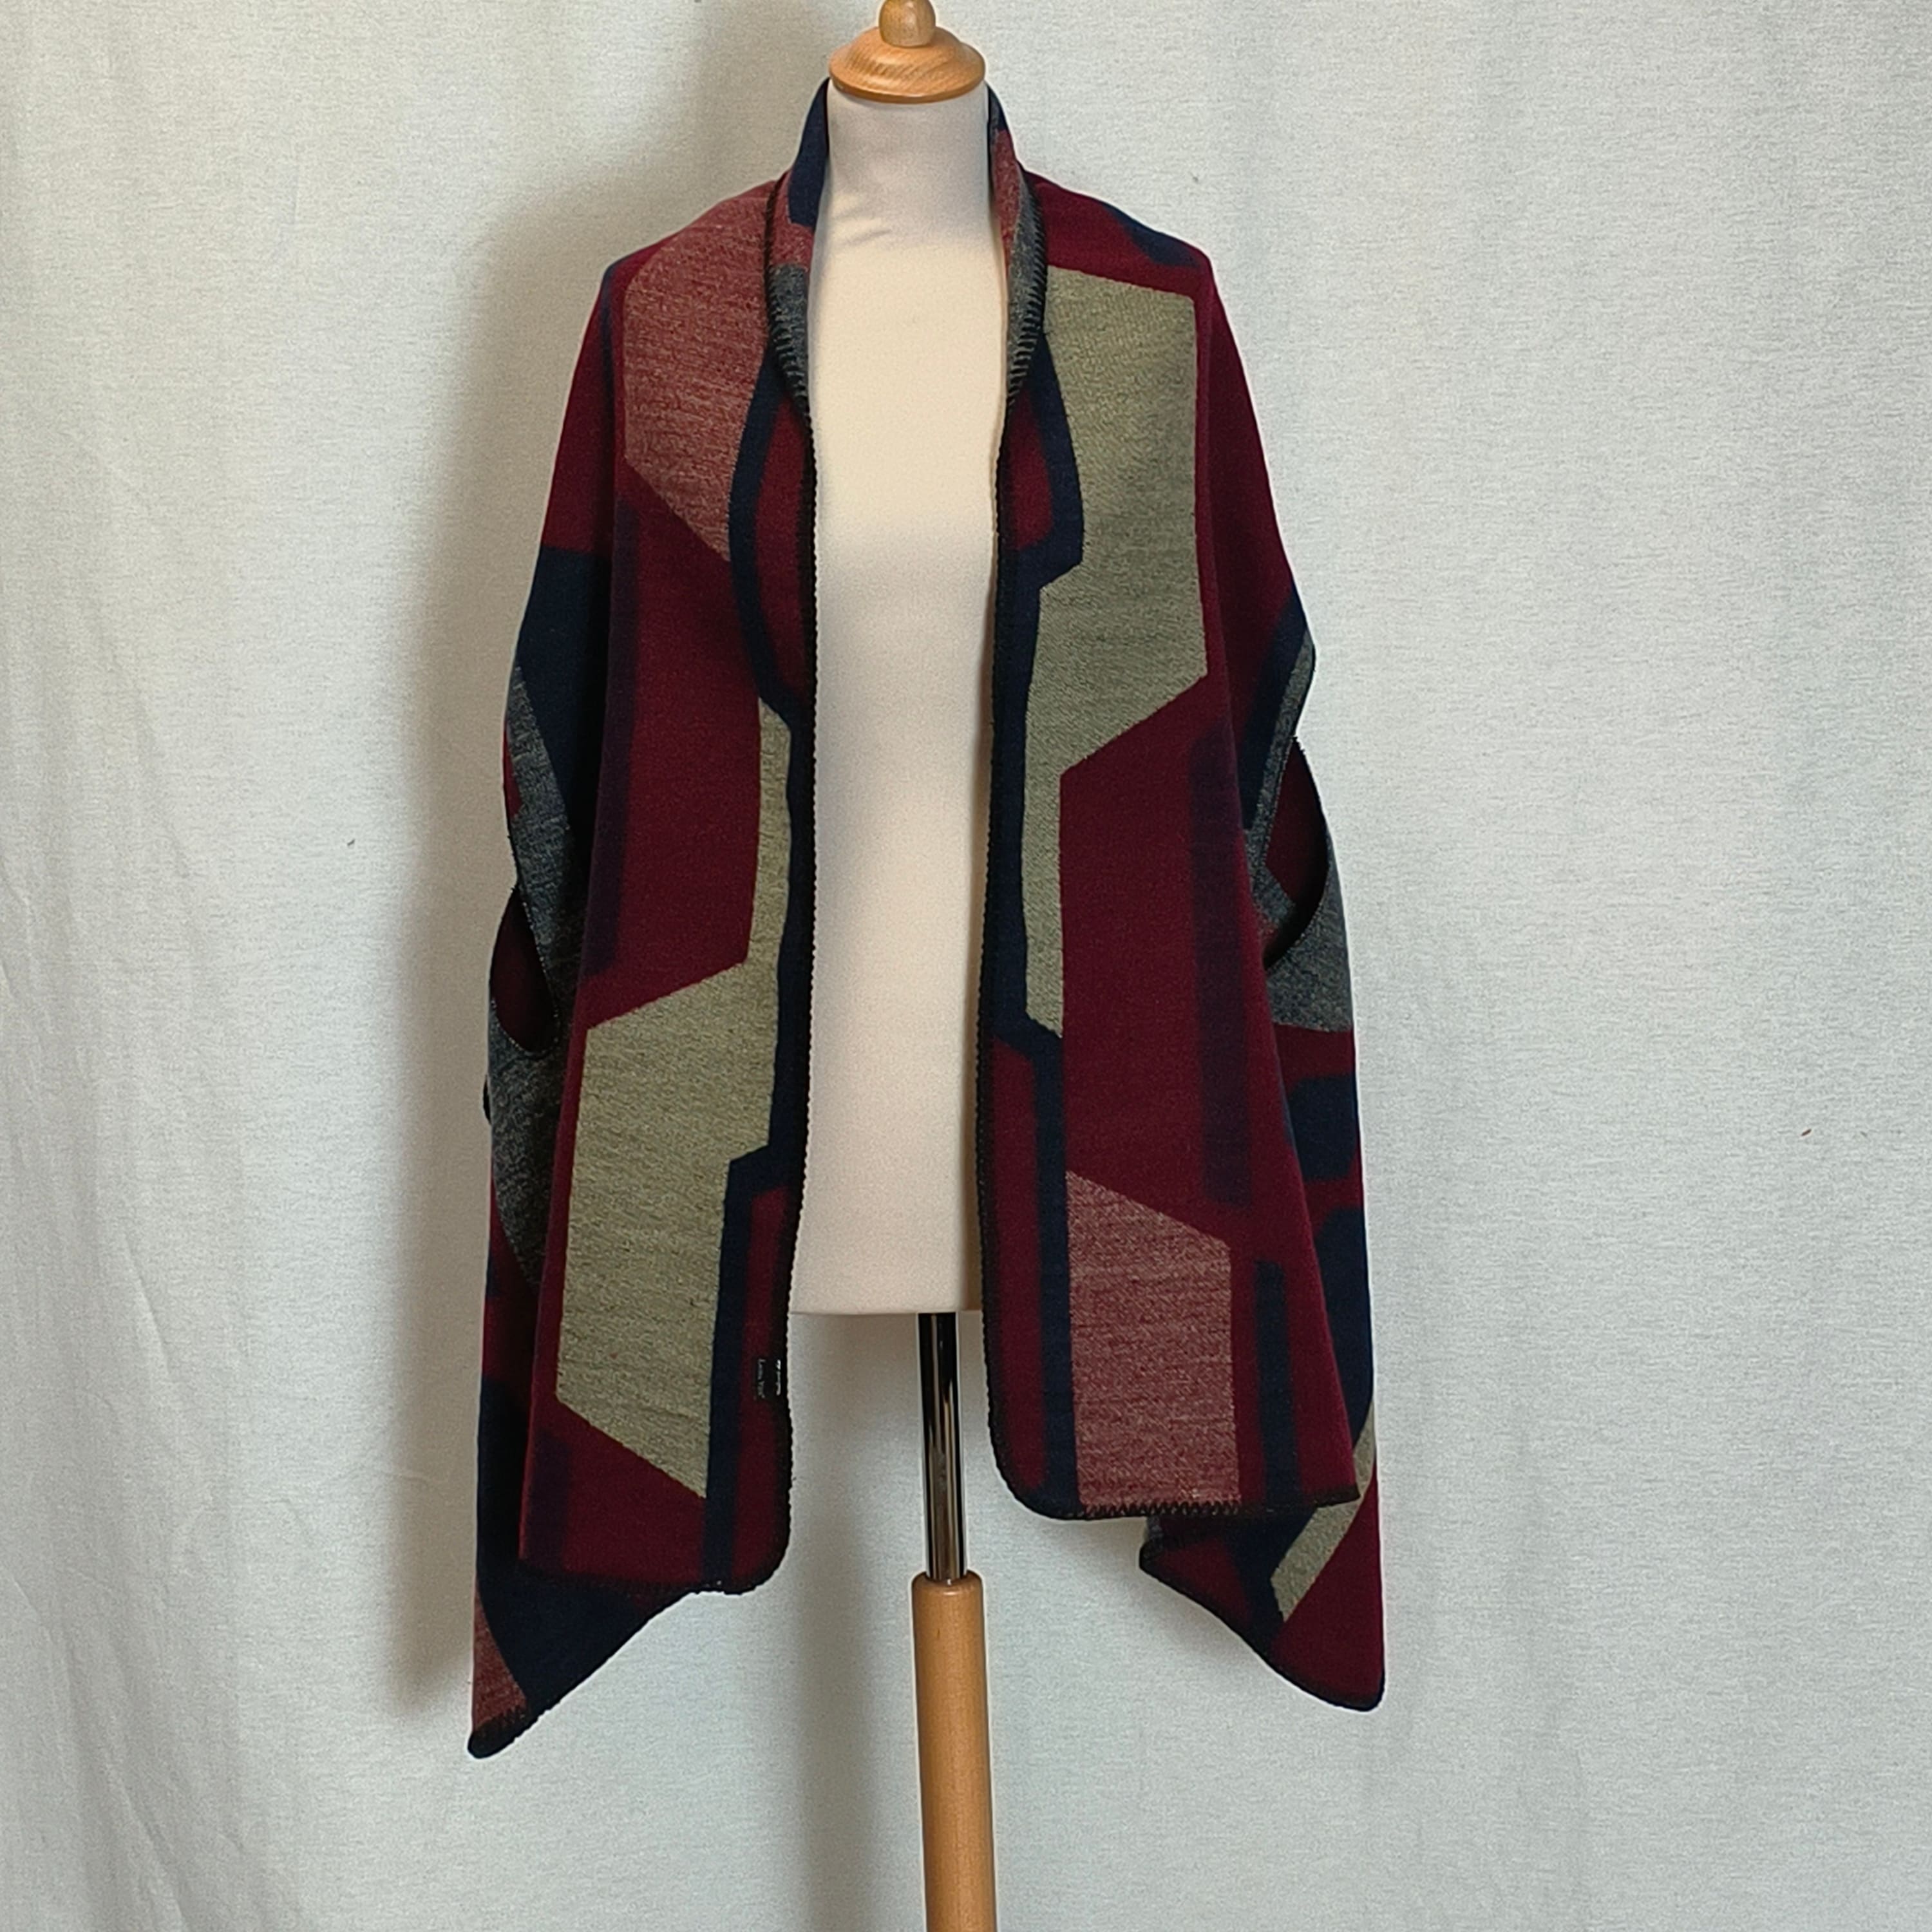 Poncho Datura - Bordeaux - shawl